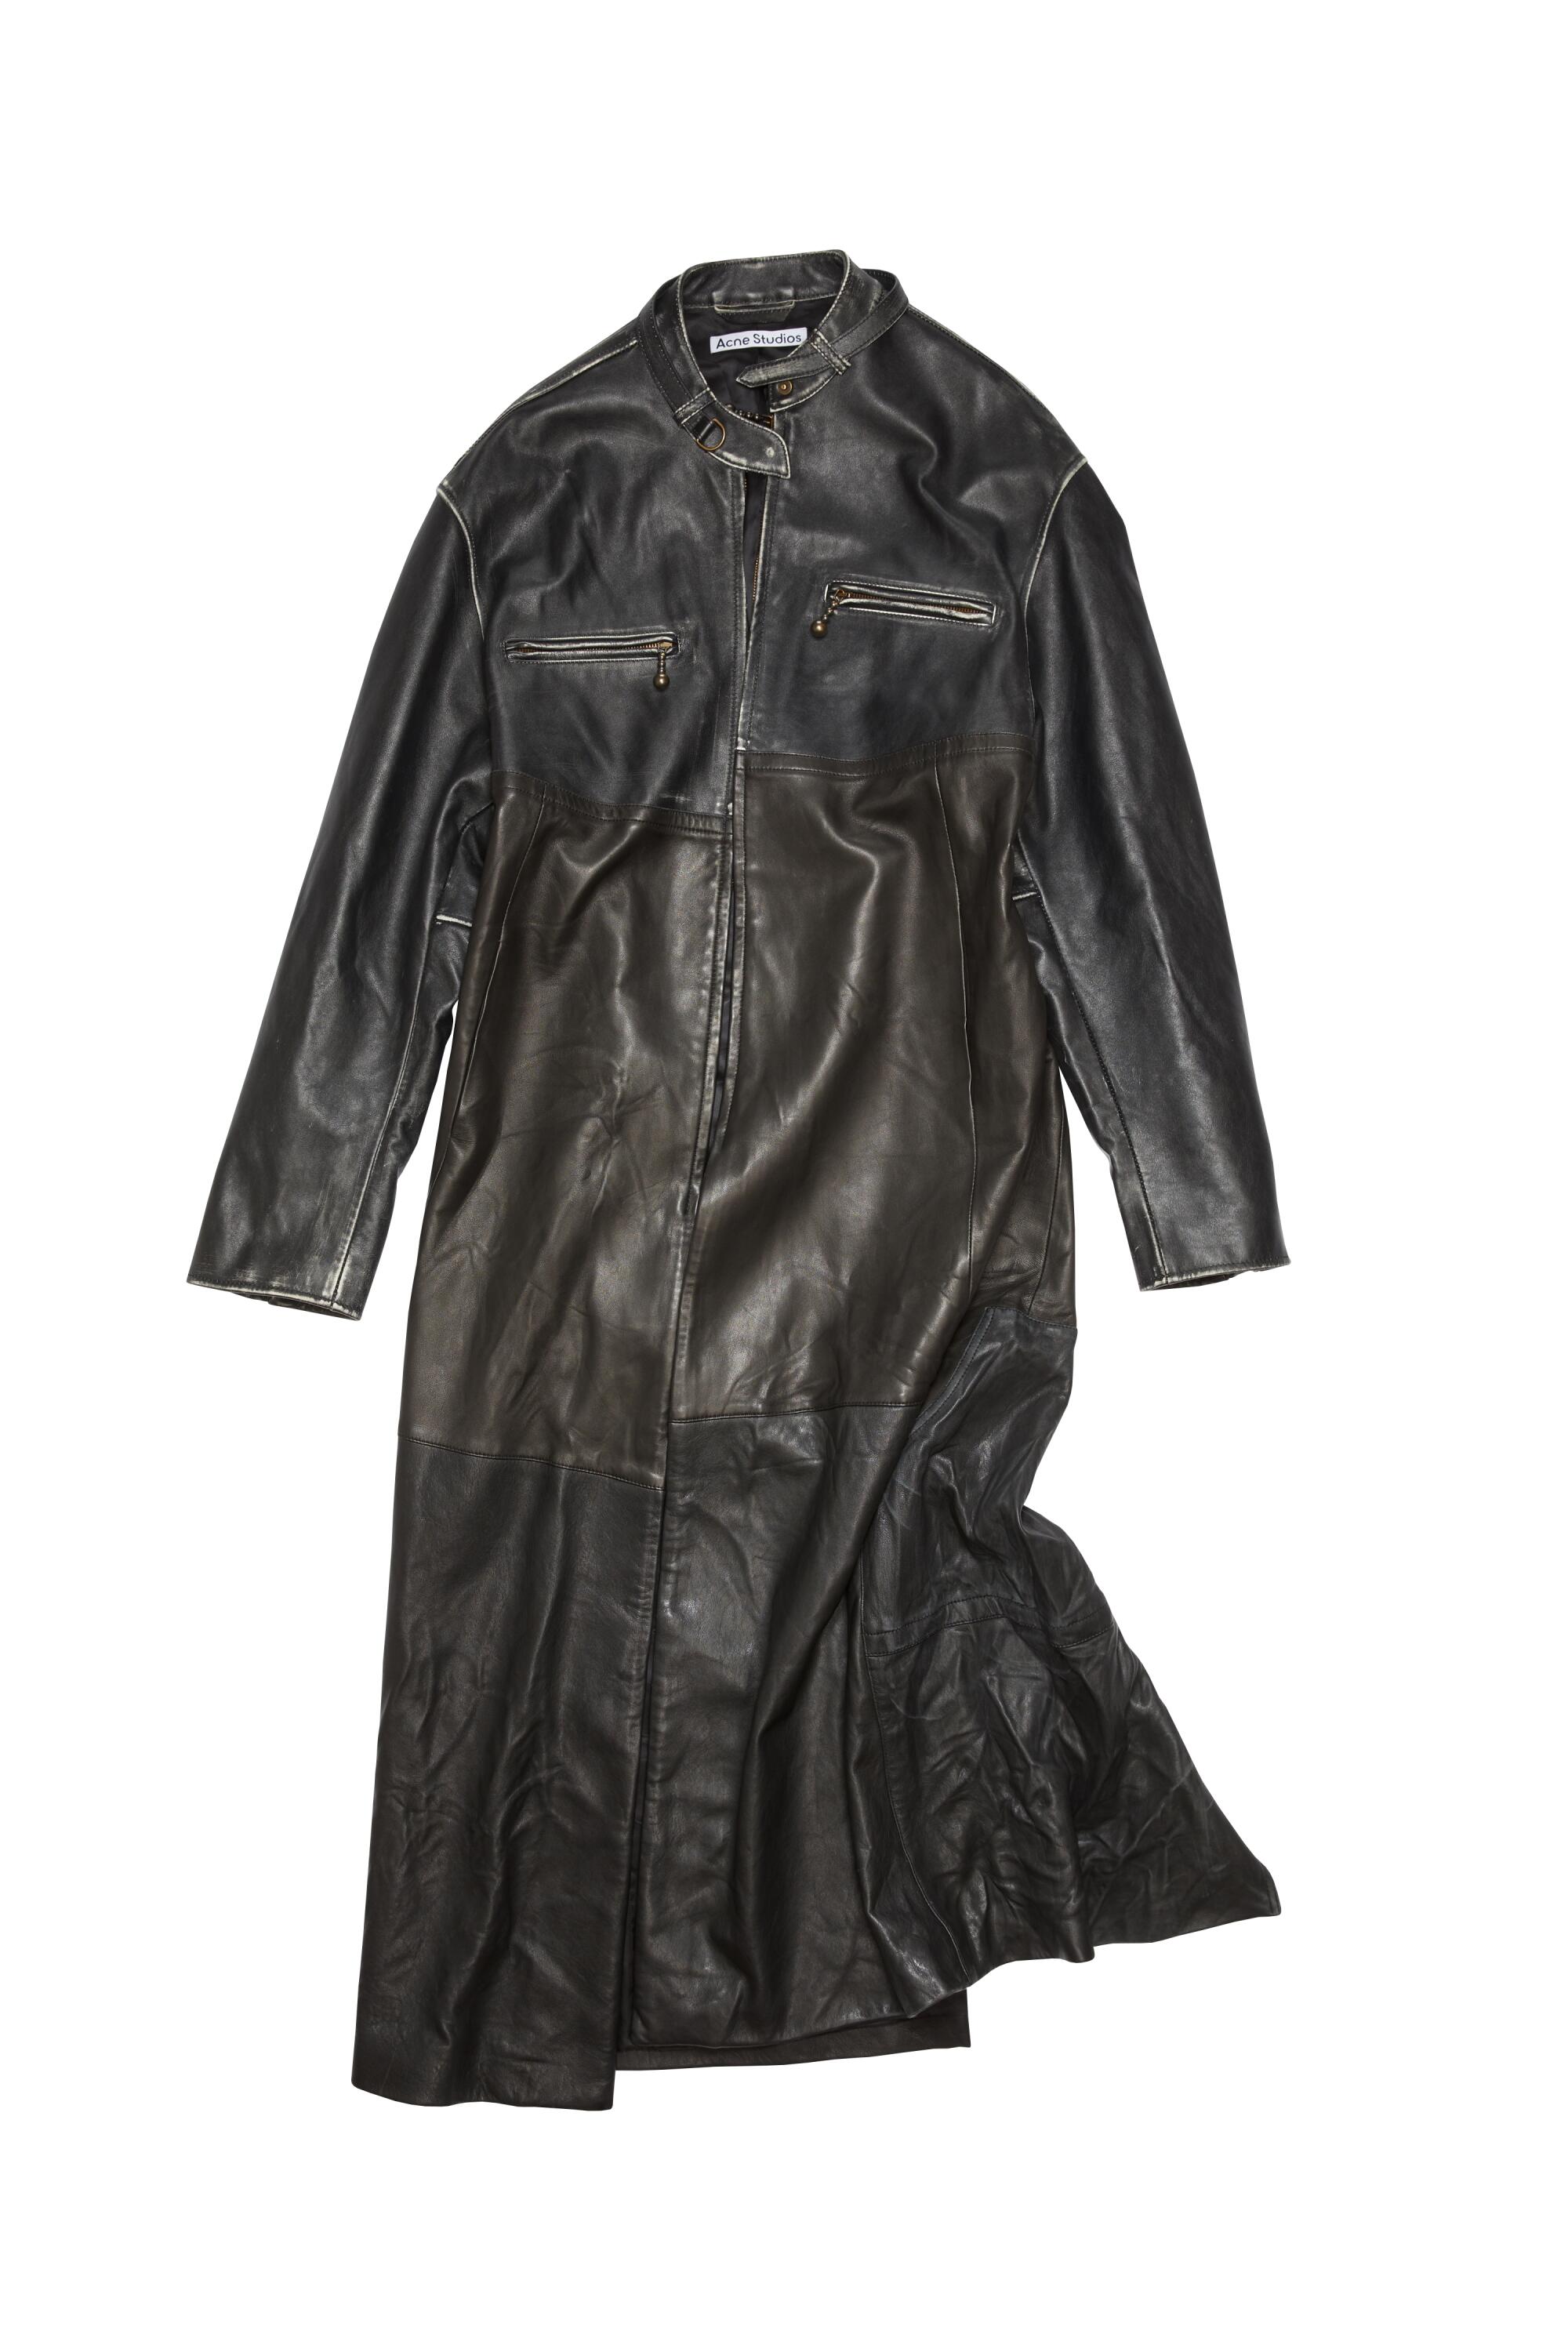 Acne Studios Black Leather Coat